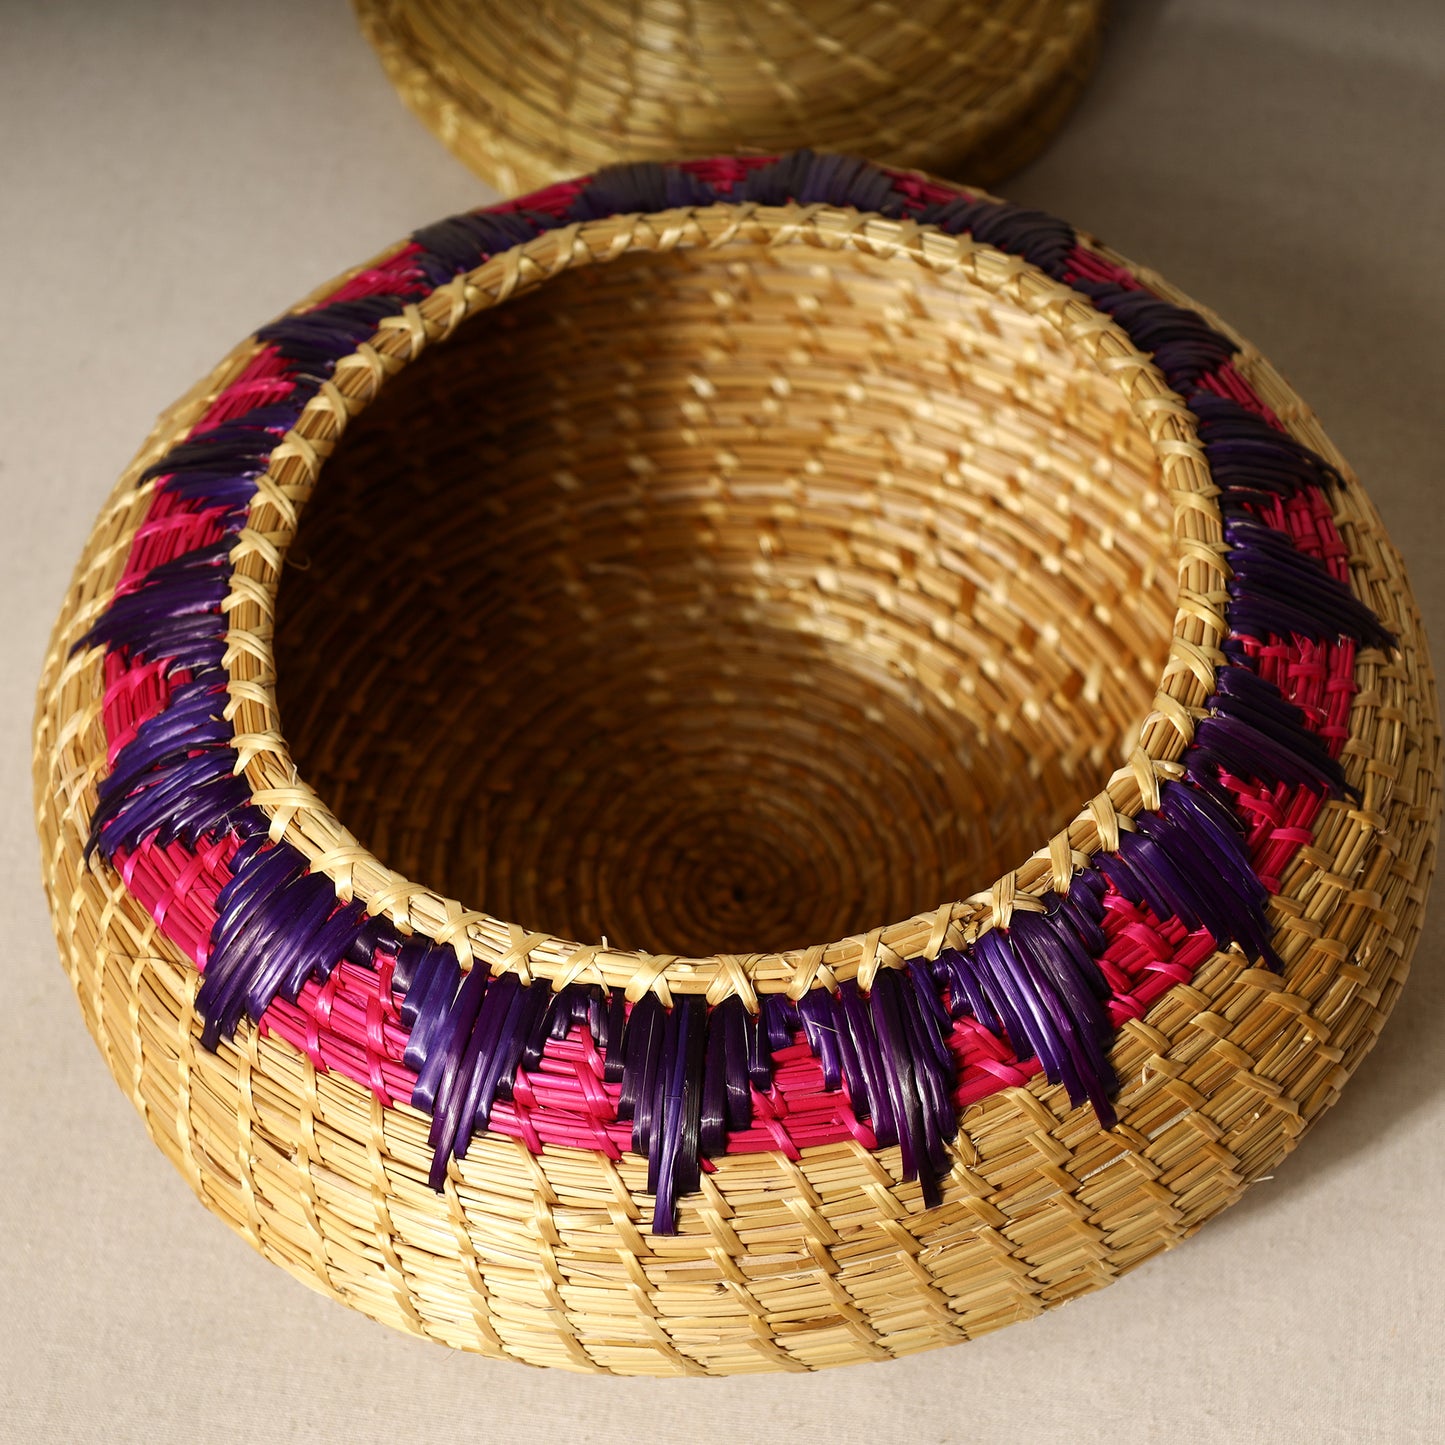 Handmade Sikki Grass Multipurpose Basket with Lid (Big)